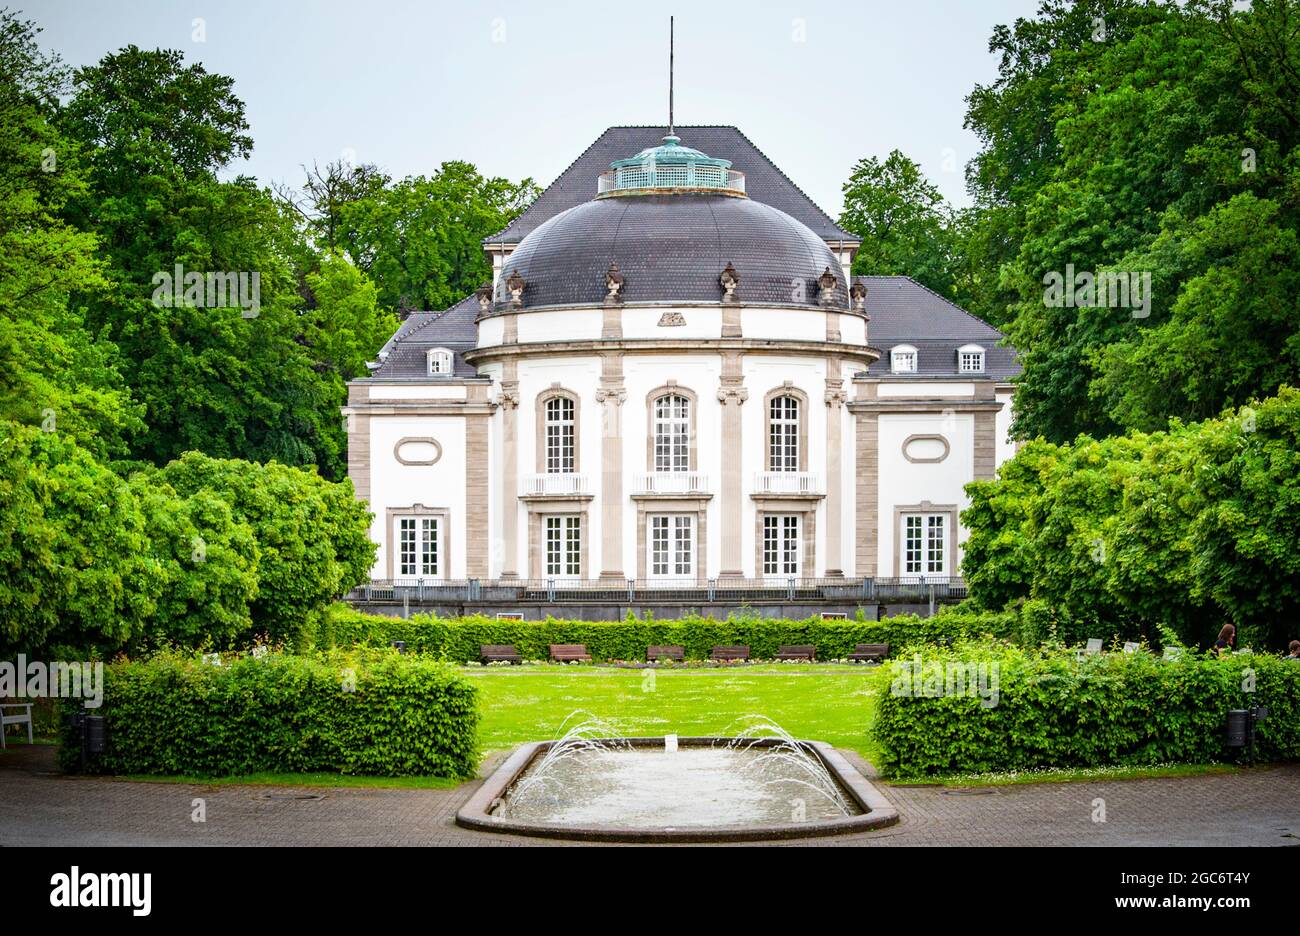 BAD OEYNHAUSEN, GERMANY. JUNE 03, 2021. Kurpark Bad Oeynhausen. Beautiful architecture in traditional style. Stock Photo